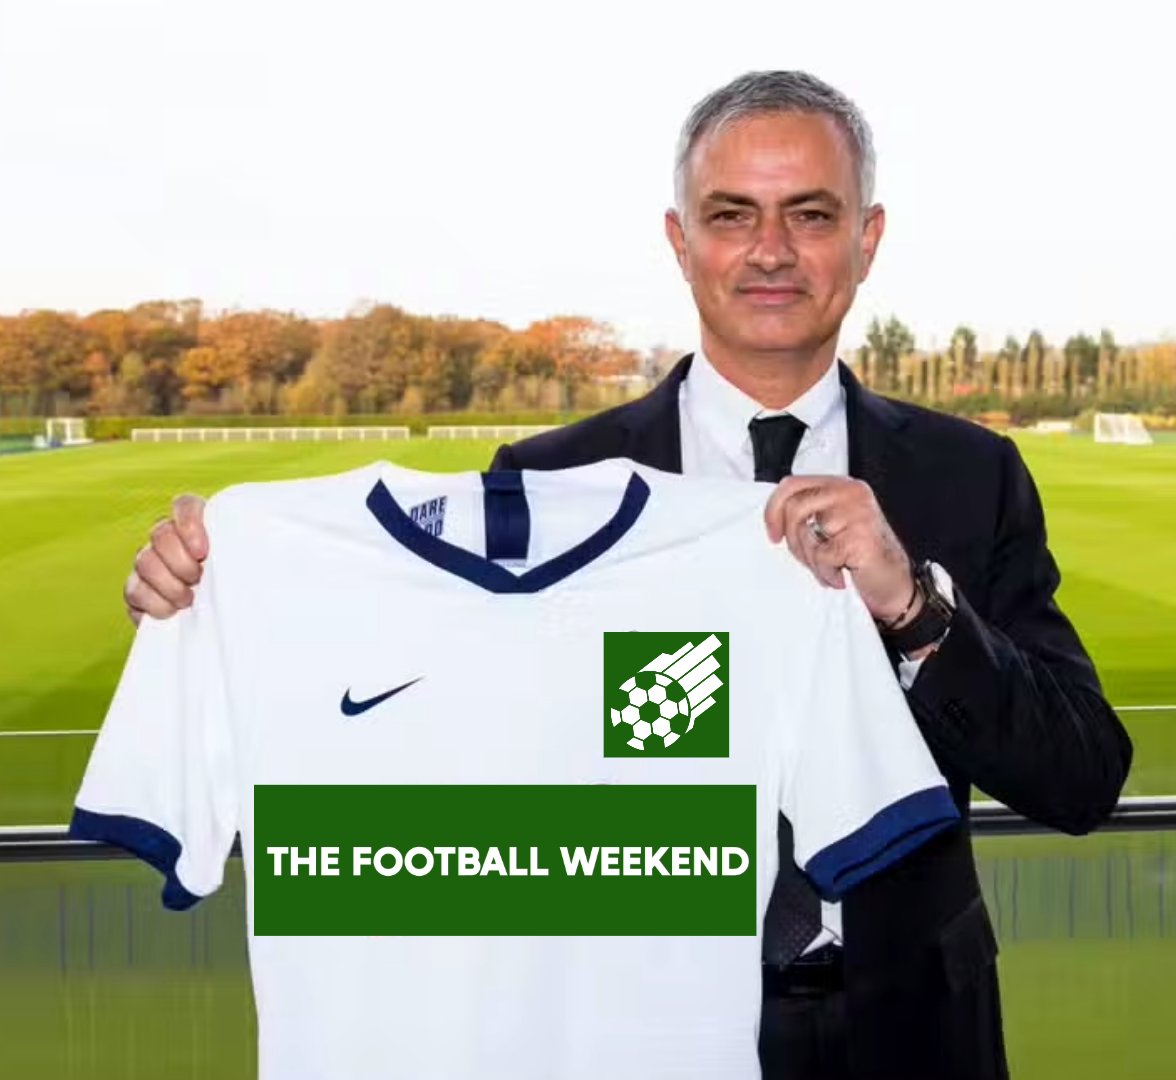 José Mourinho has signed with ⚽︎THE FOOTBALL WEEKEND on a three-year deal. Details here: thefootballweekend.com Brighton Pepi Sofyan Amrabat Mauricio Pochettino Wolves Reyna Nasri First Take